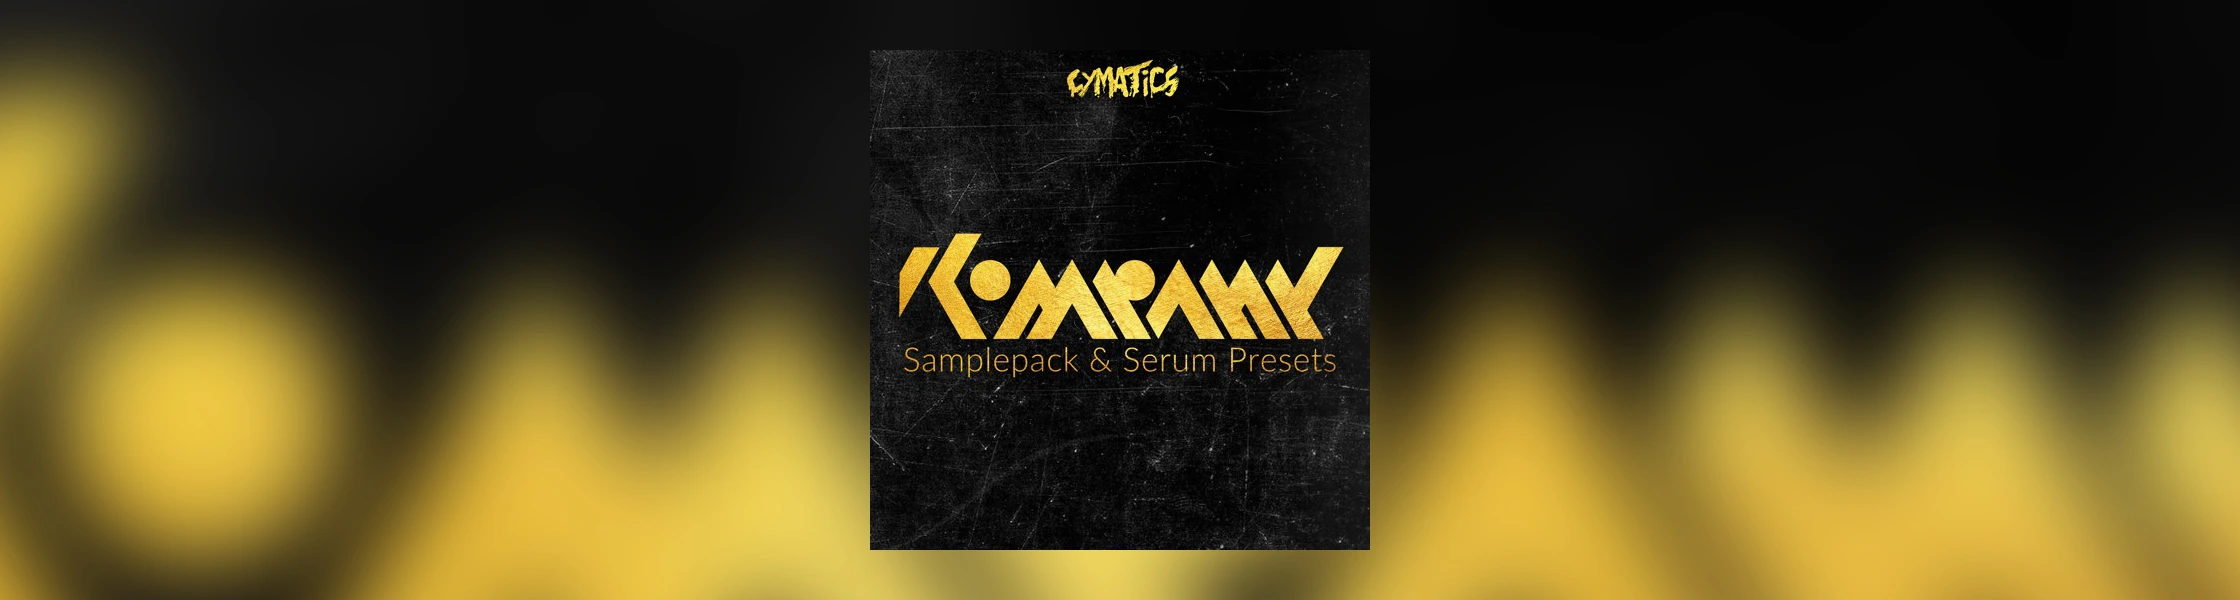 Cymatics Kompany Sample pack